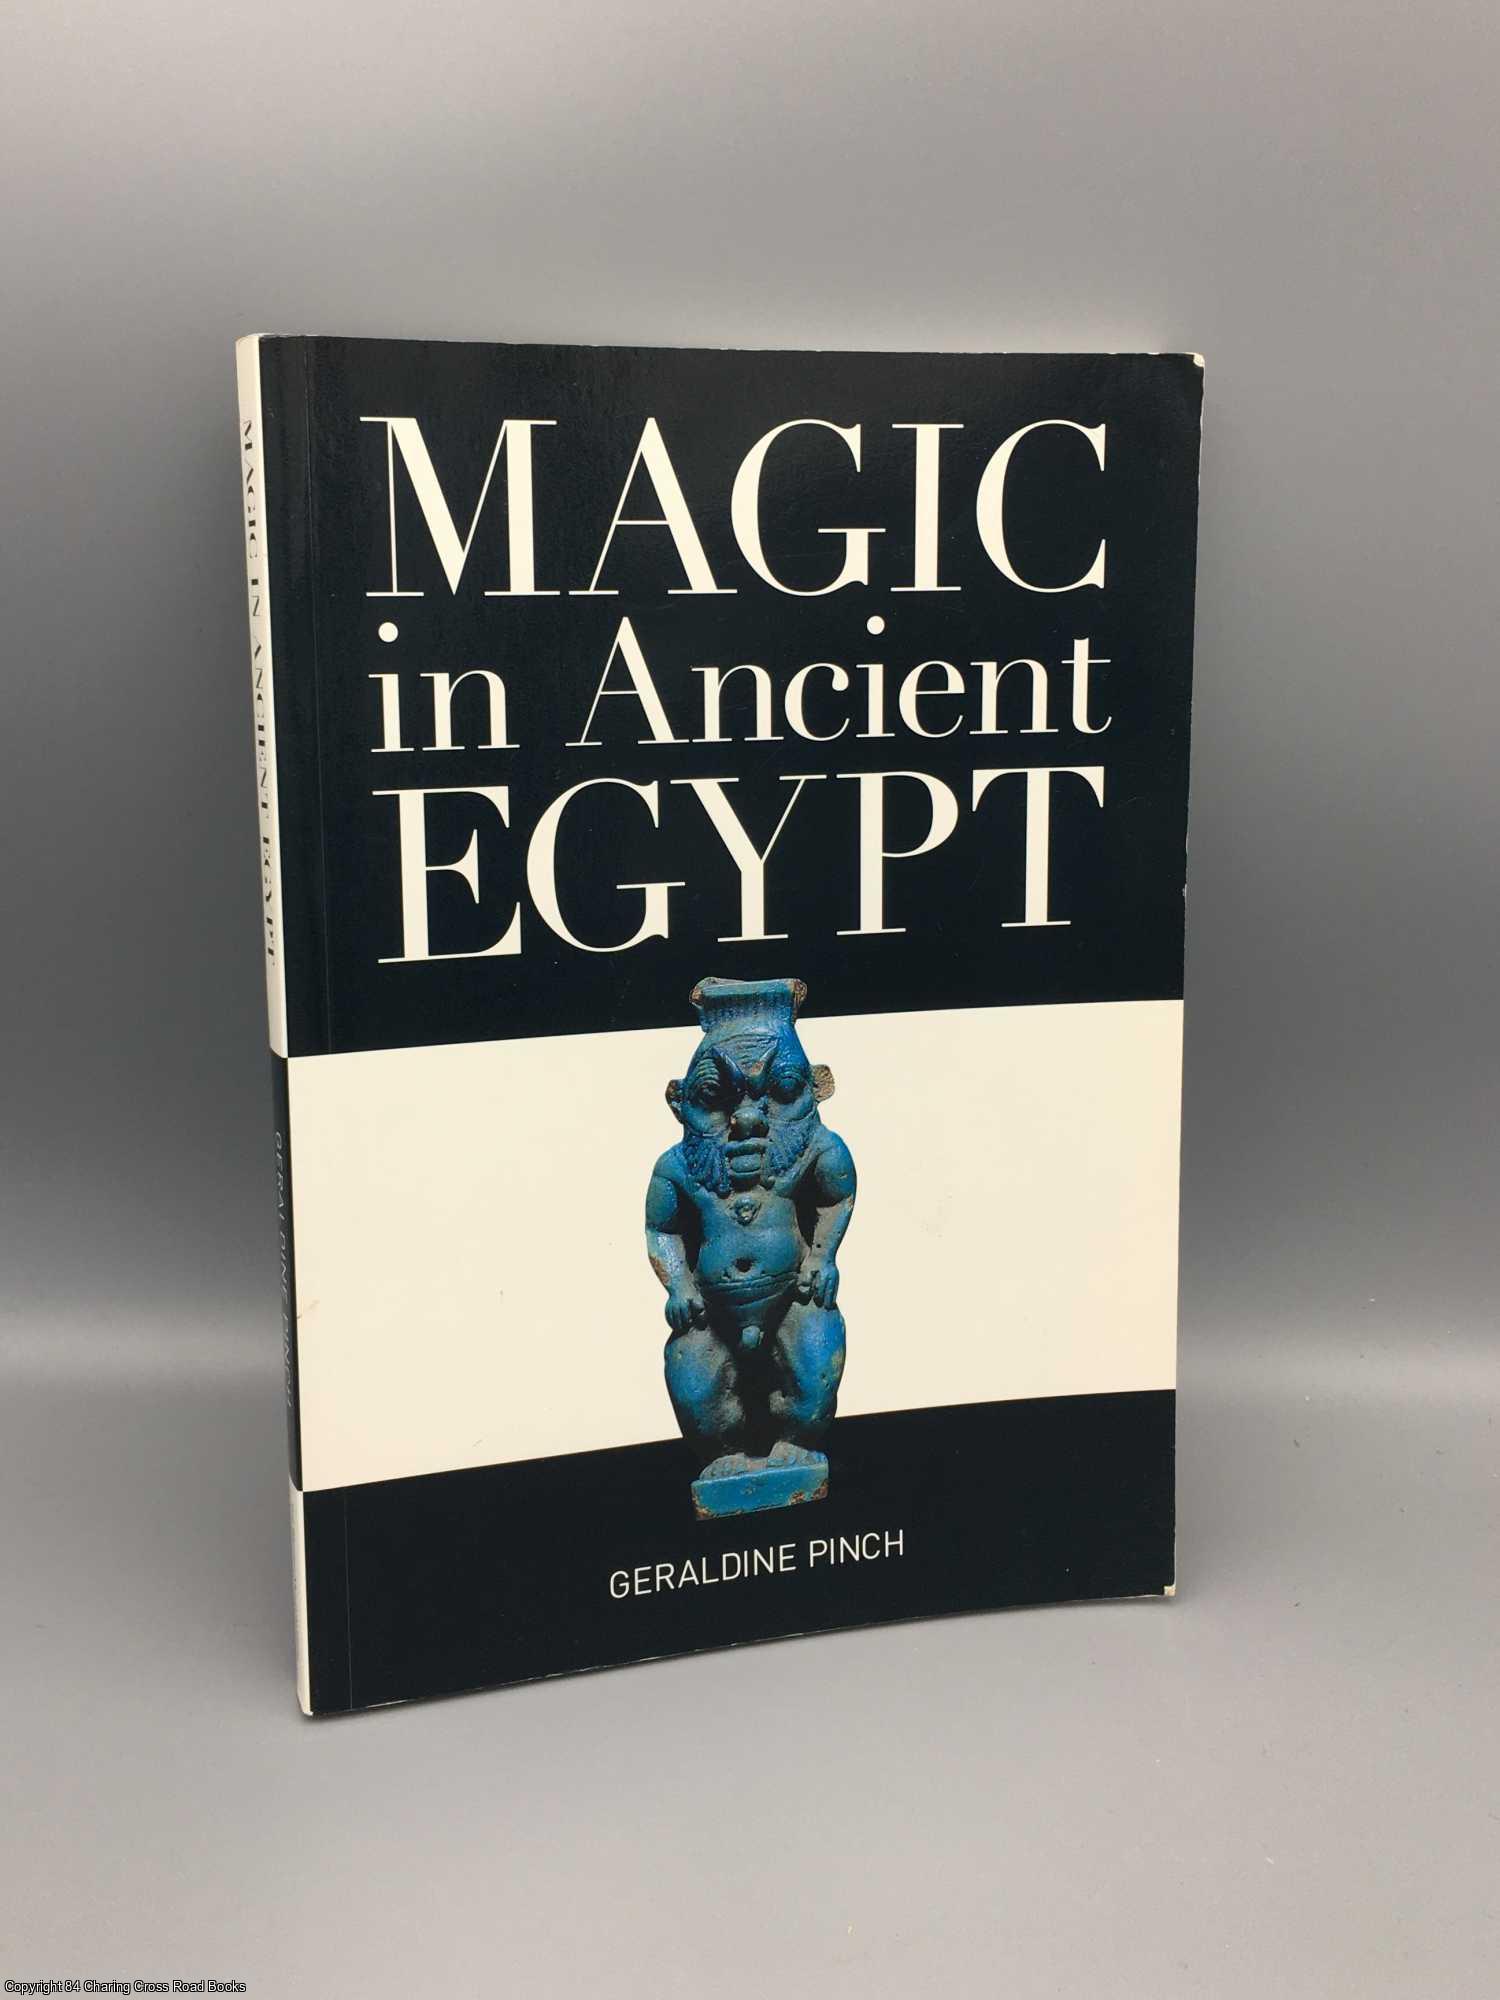 Pinch, Geraldine - Magic in Ancient Egypt